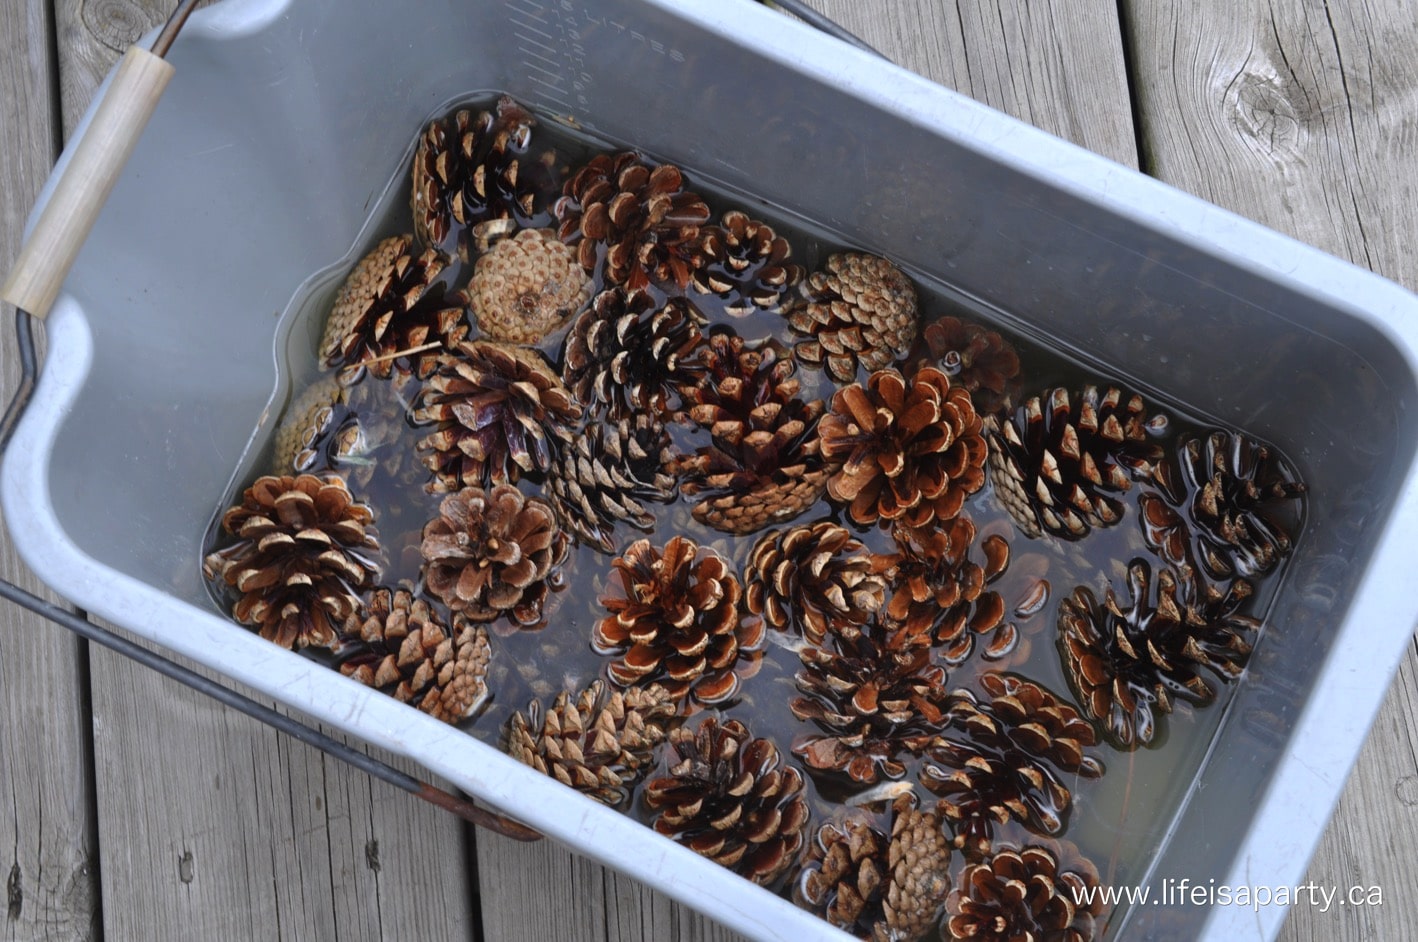 bleaching pinecones in a bucket